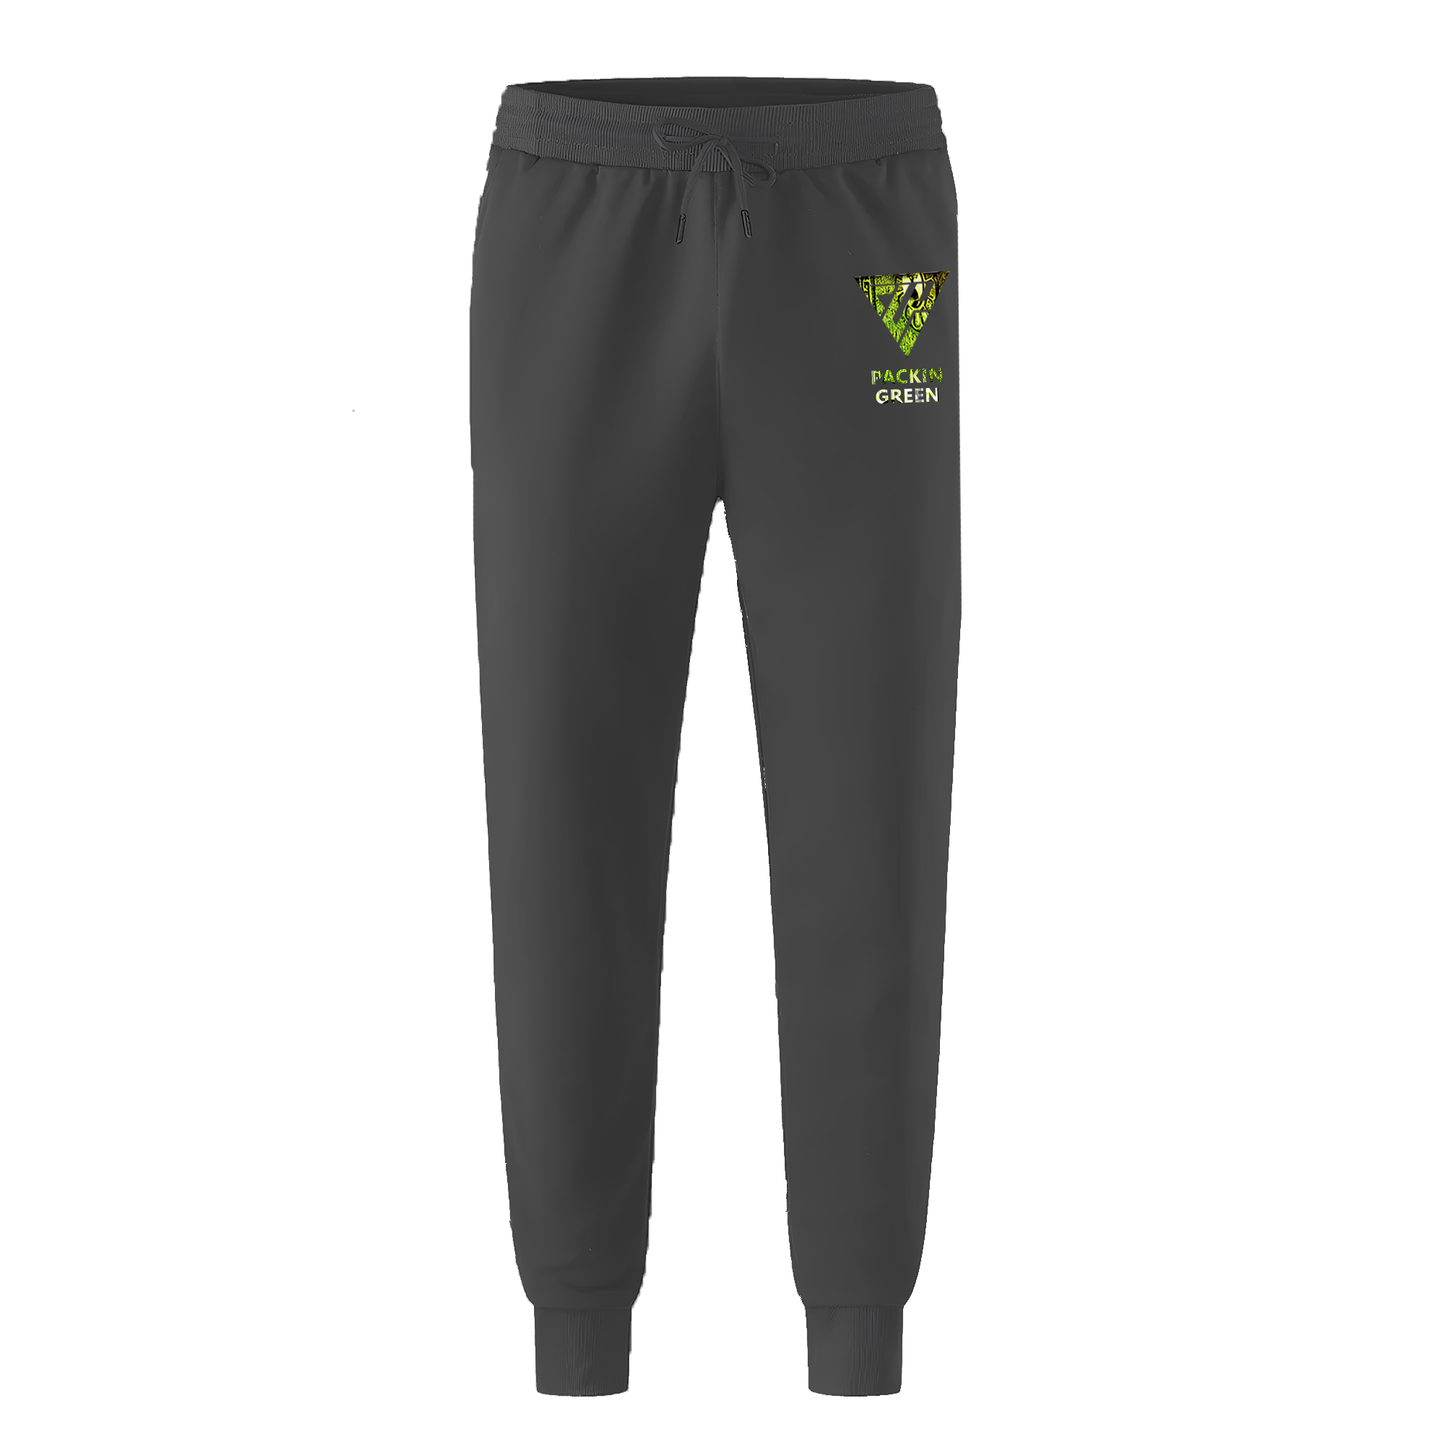 Packin Green Sports Pants Sweatpants (Black)